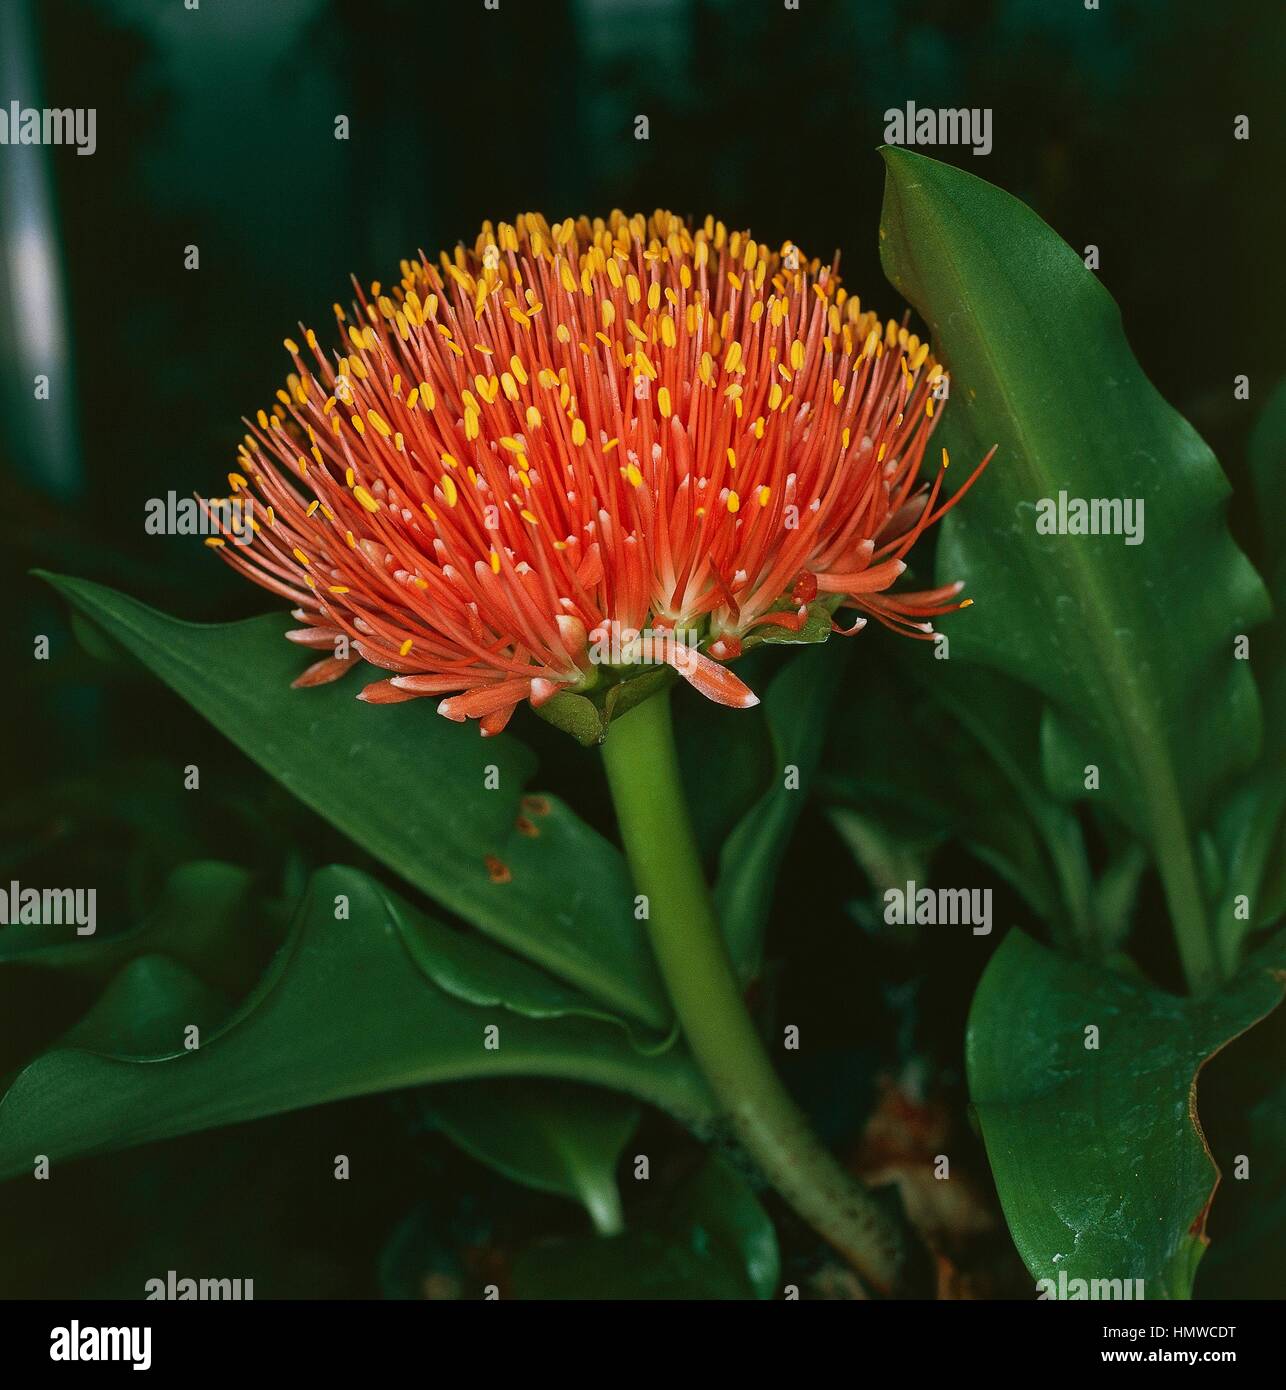 Blood flower or Paintbrush lily (Haemanthus coccineus), Amaryllidaceae. Stock Photo